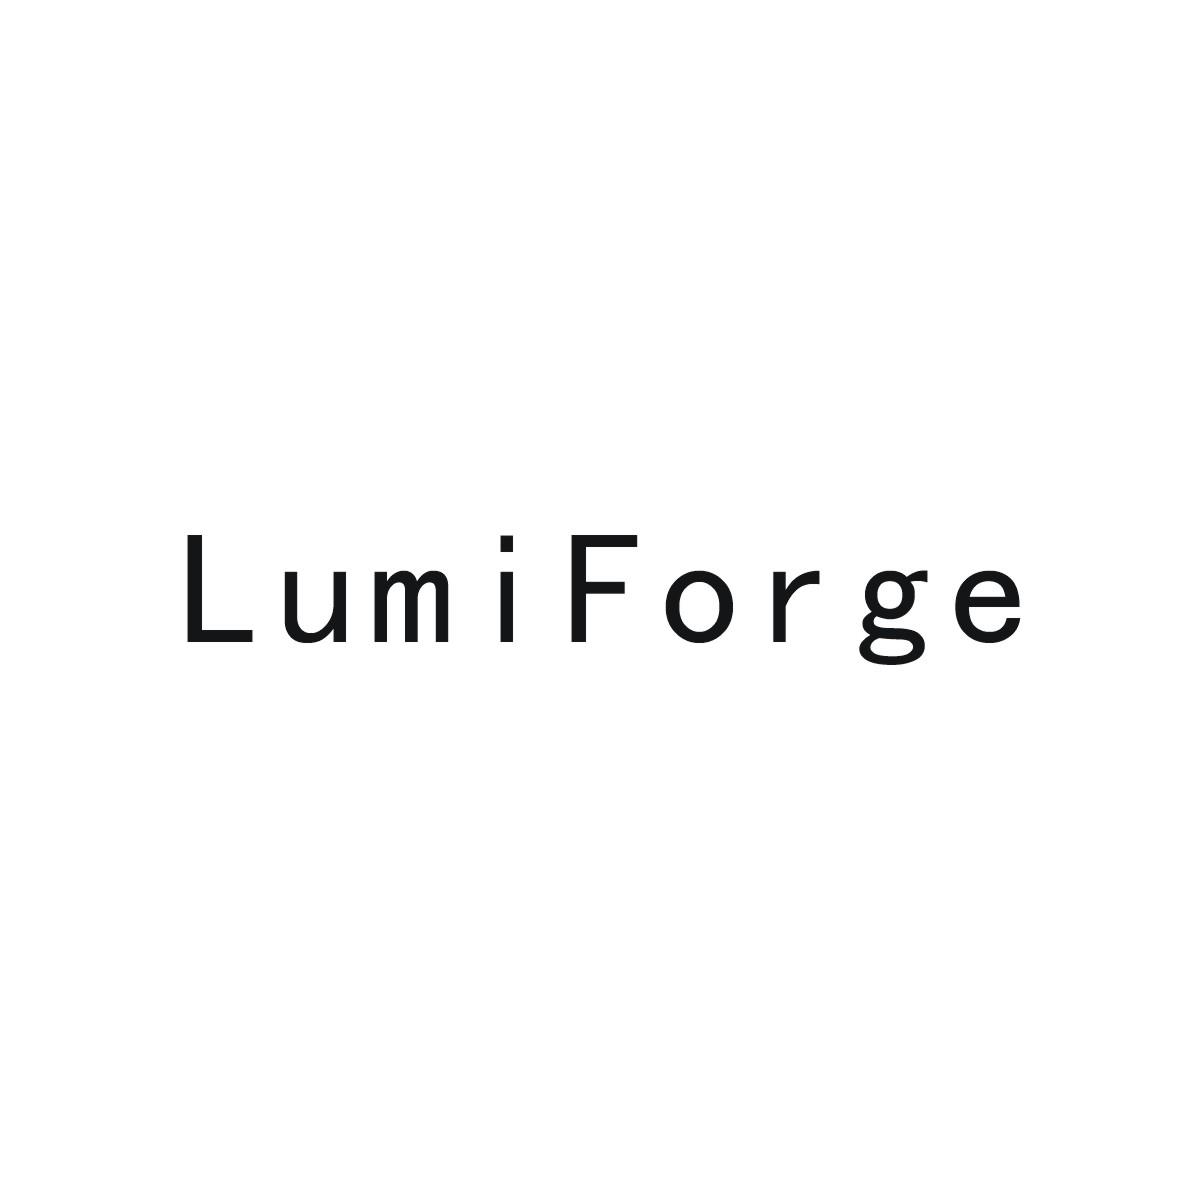 Lumi Forge刨床商标转让费用买卖交易流程